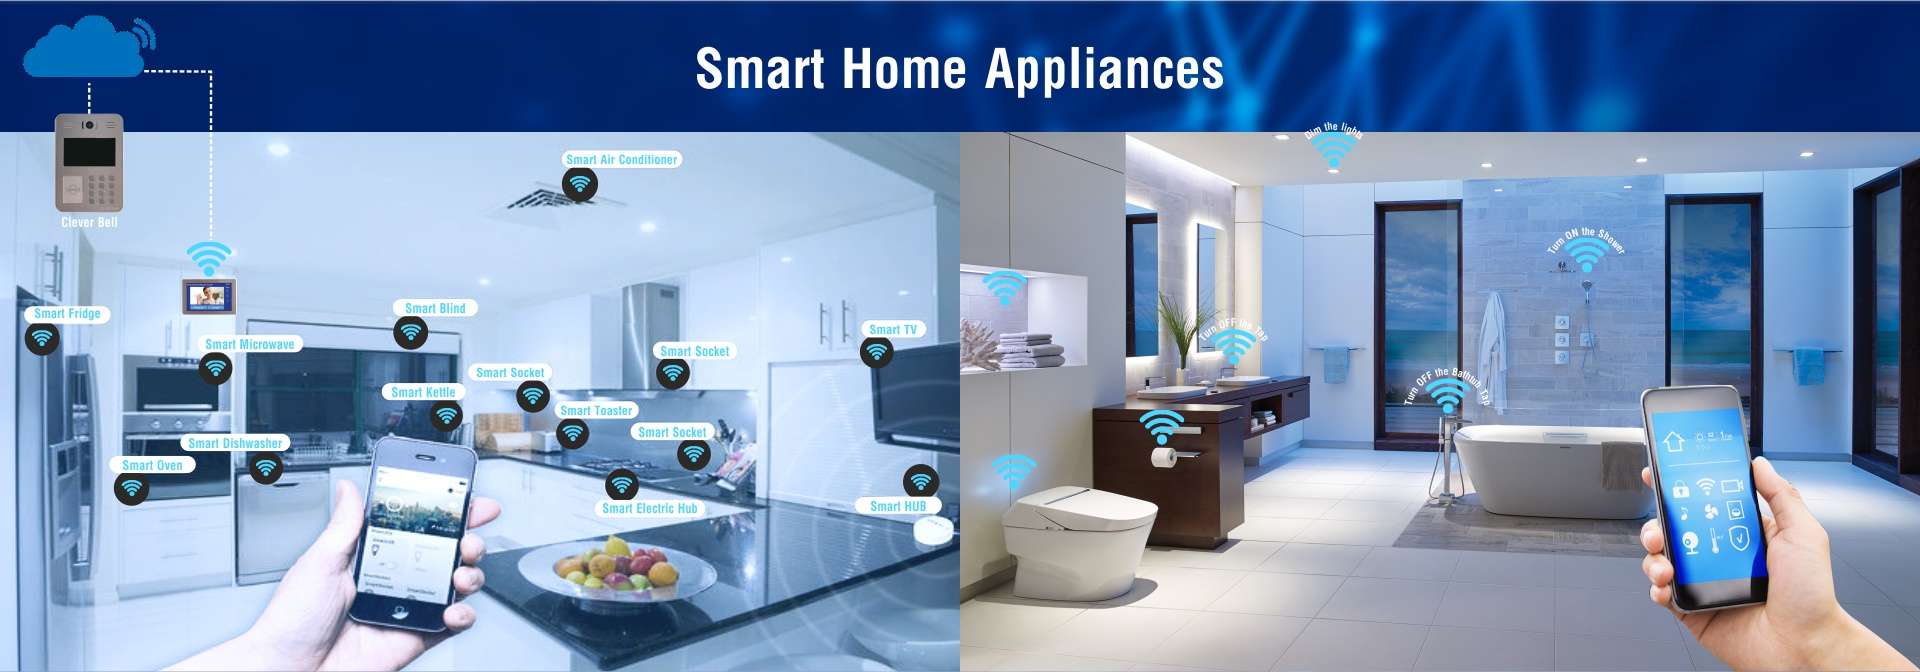 http://www.faststreamtech.com/wp-content/uploads/2020/03/Smart-Home-Appliances.jpg